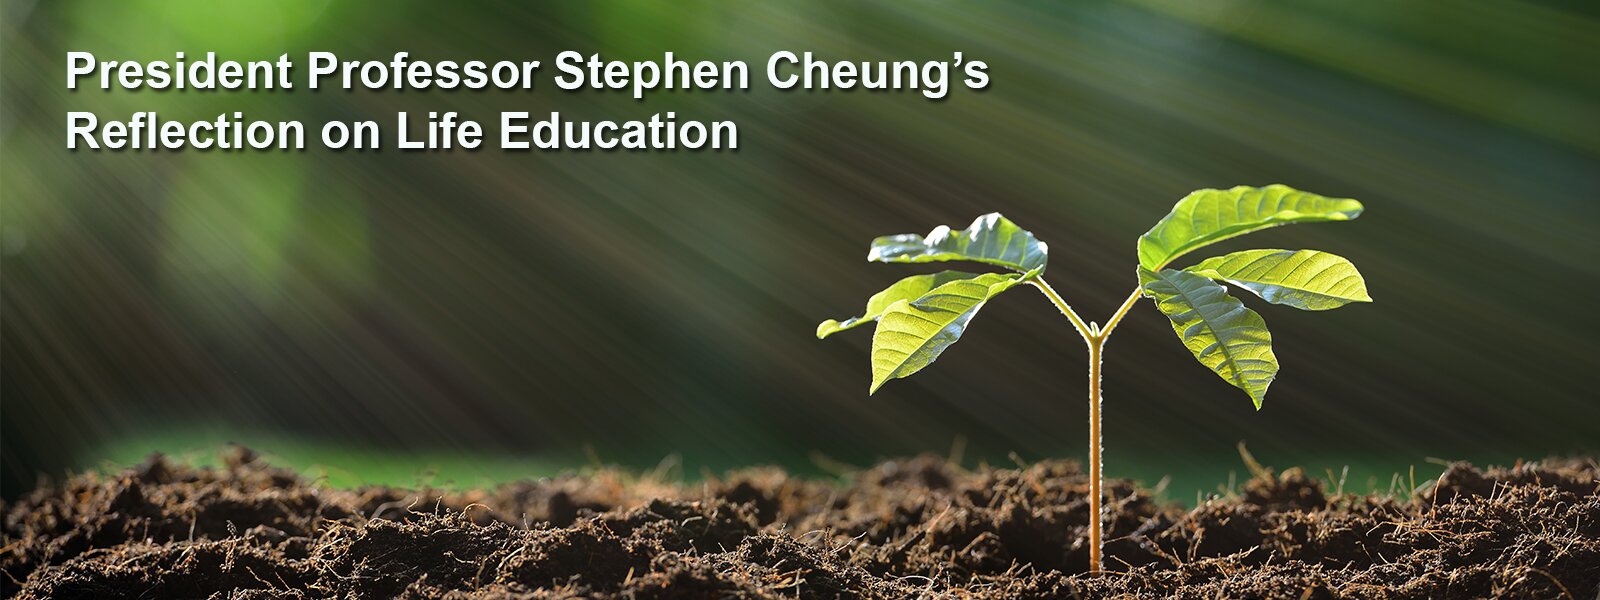 President Professor Stephen Cheung's Reflection on Life Education